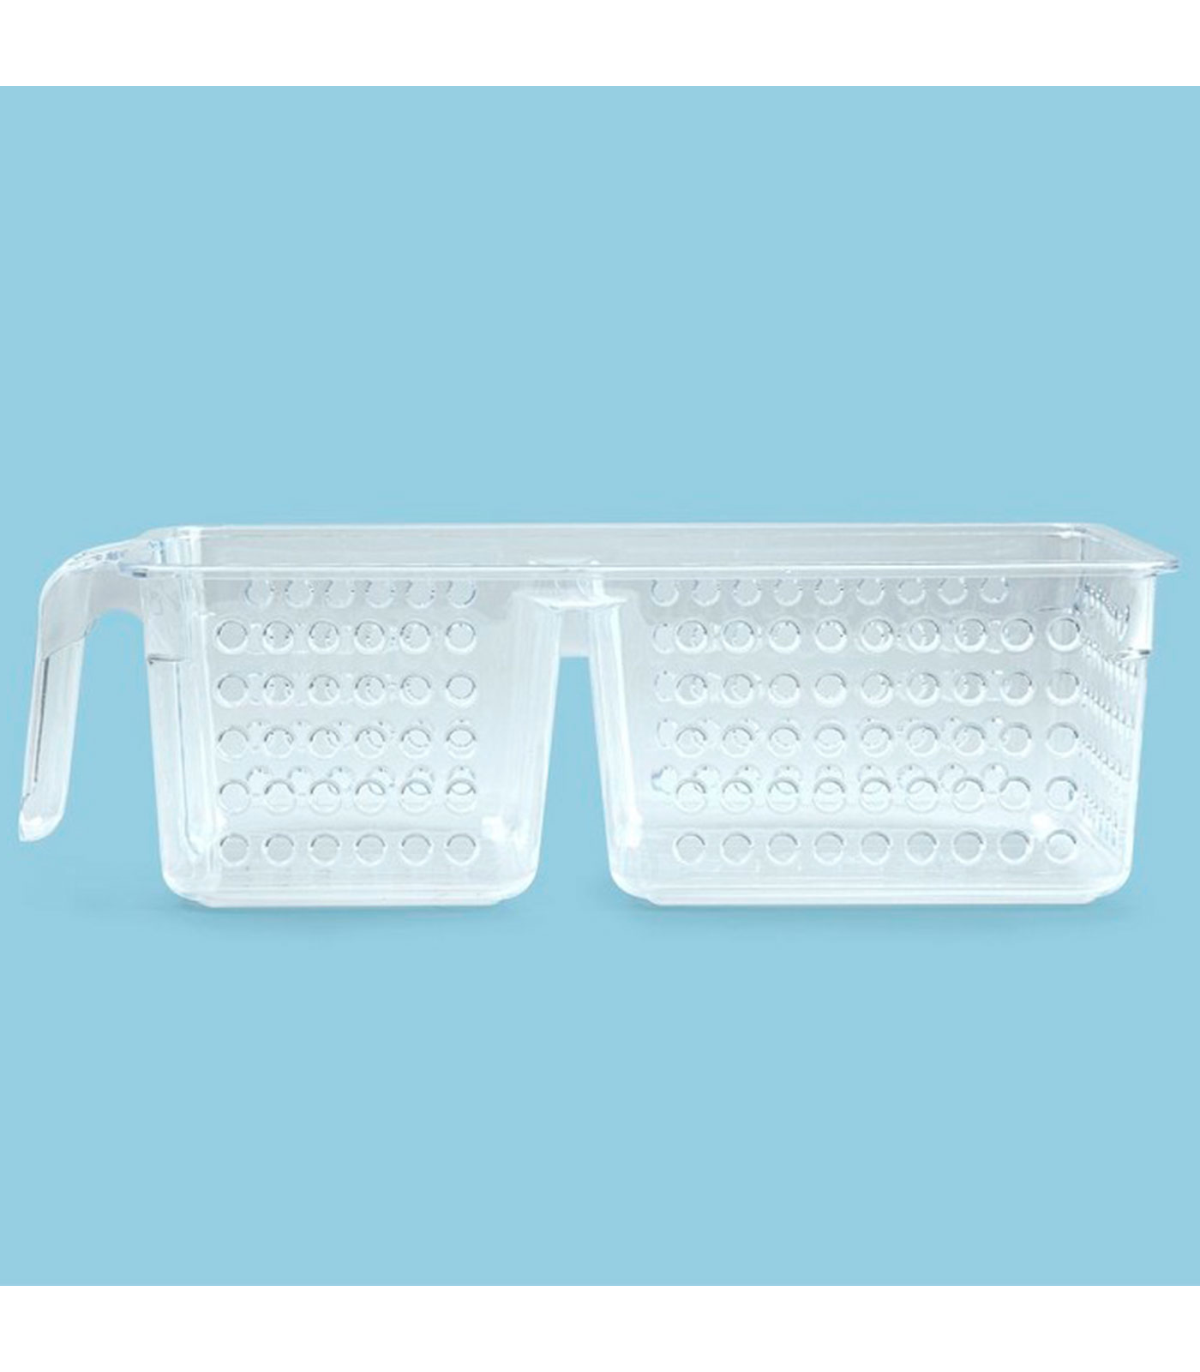 Tradineur - Cajón organizador para reutilizable, 2 compartimentos, recipiente plástico transparente con agujeros